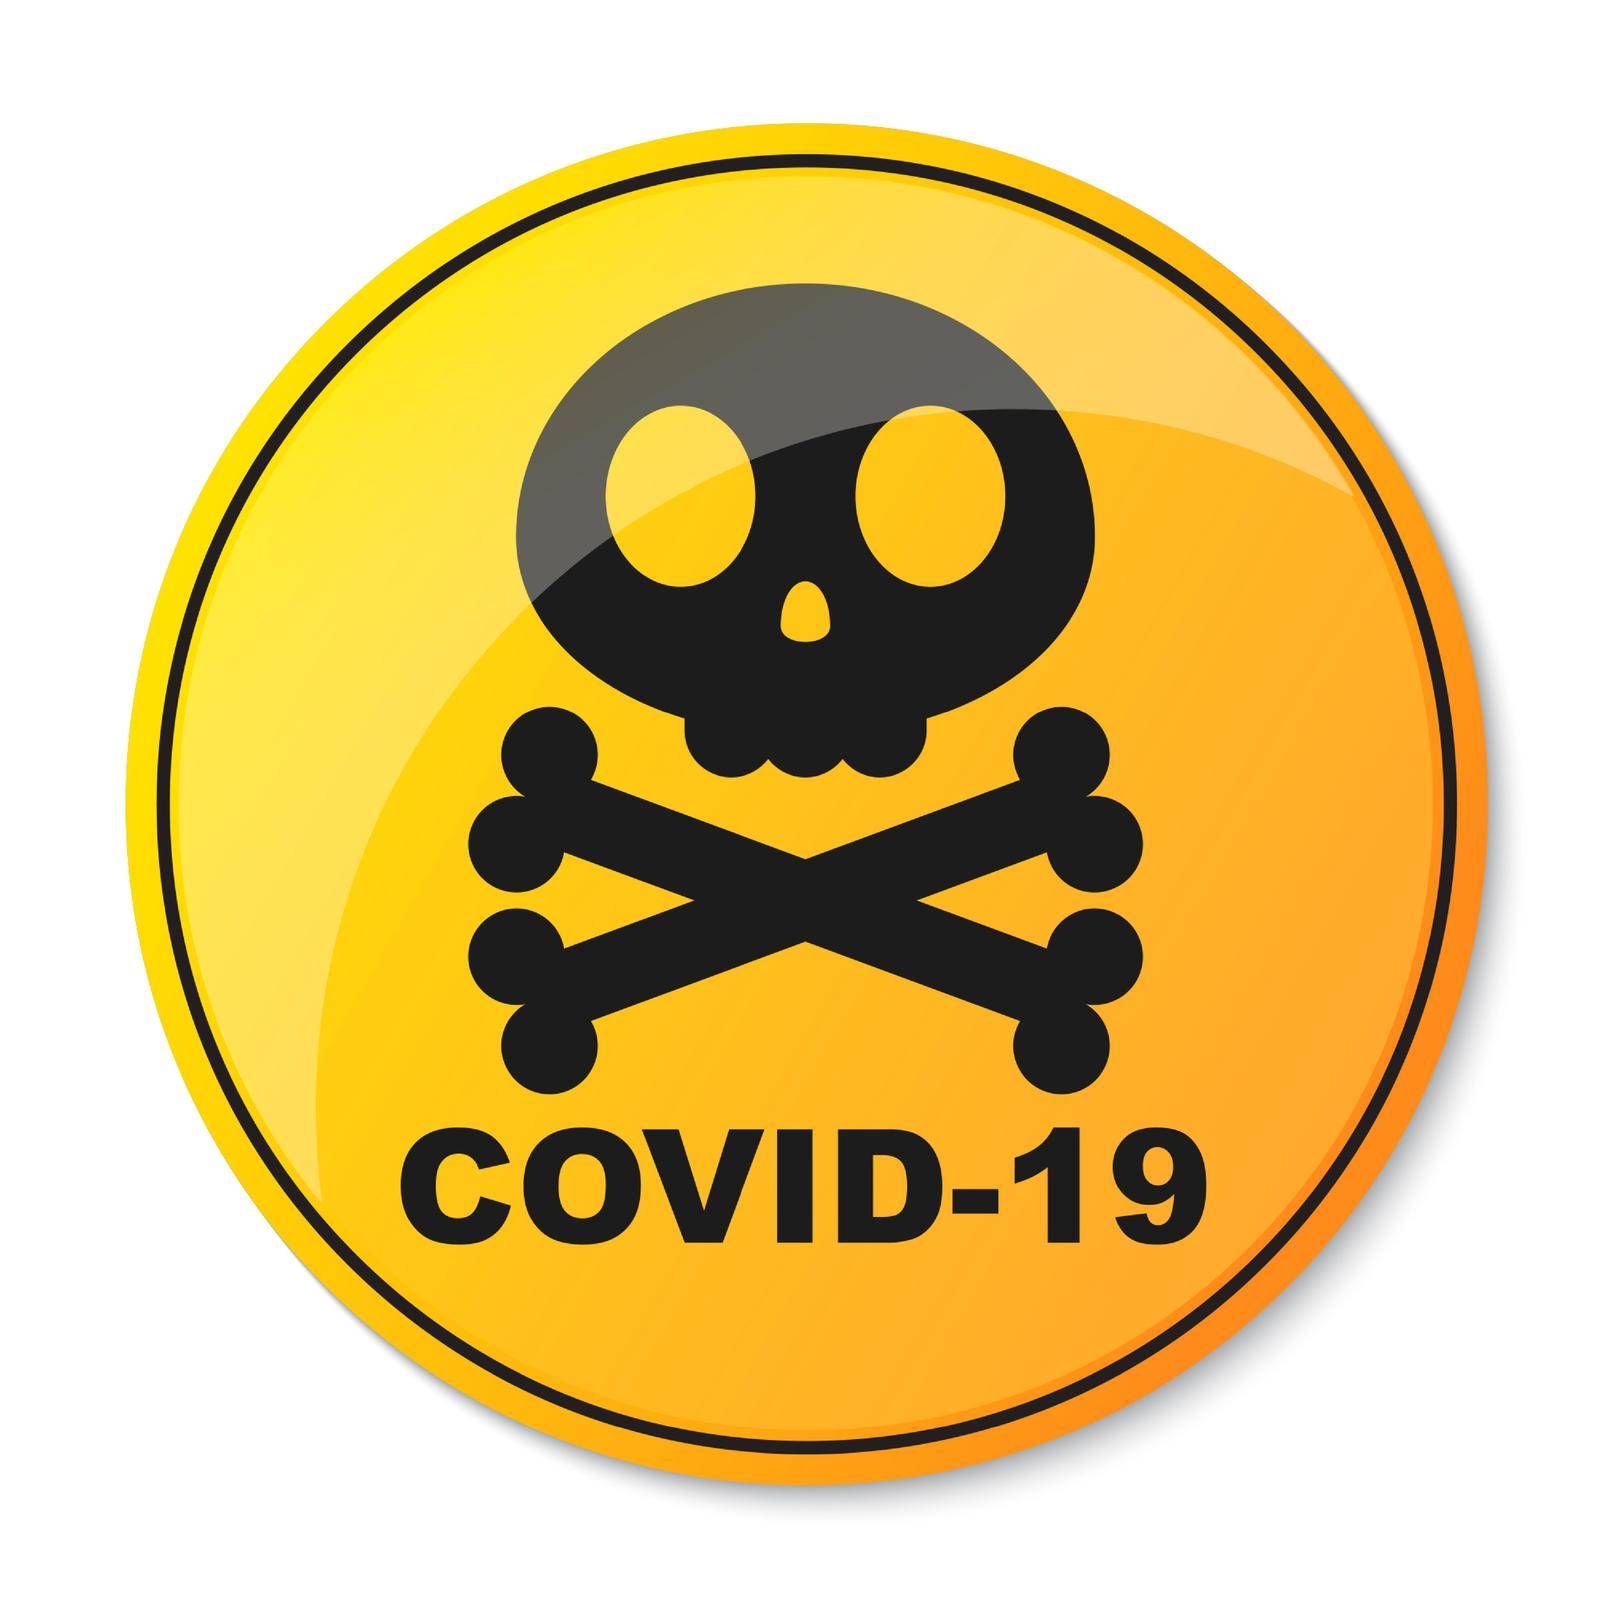 Covid-19 warning symbol. Coronavirus danger sign. by Chekman